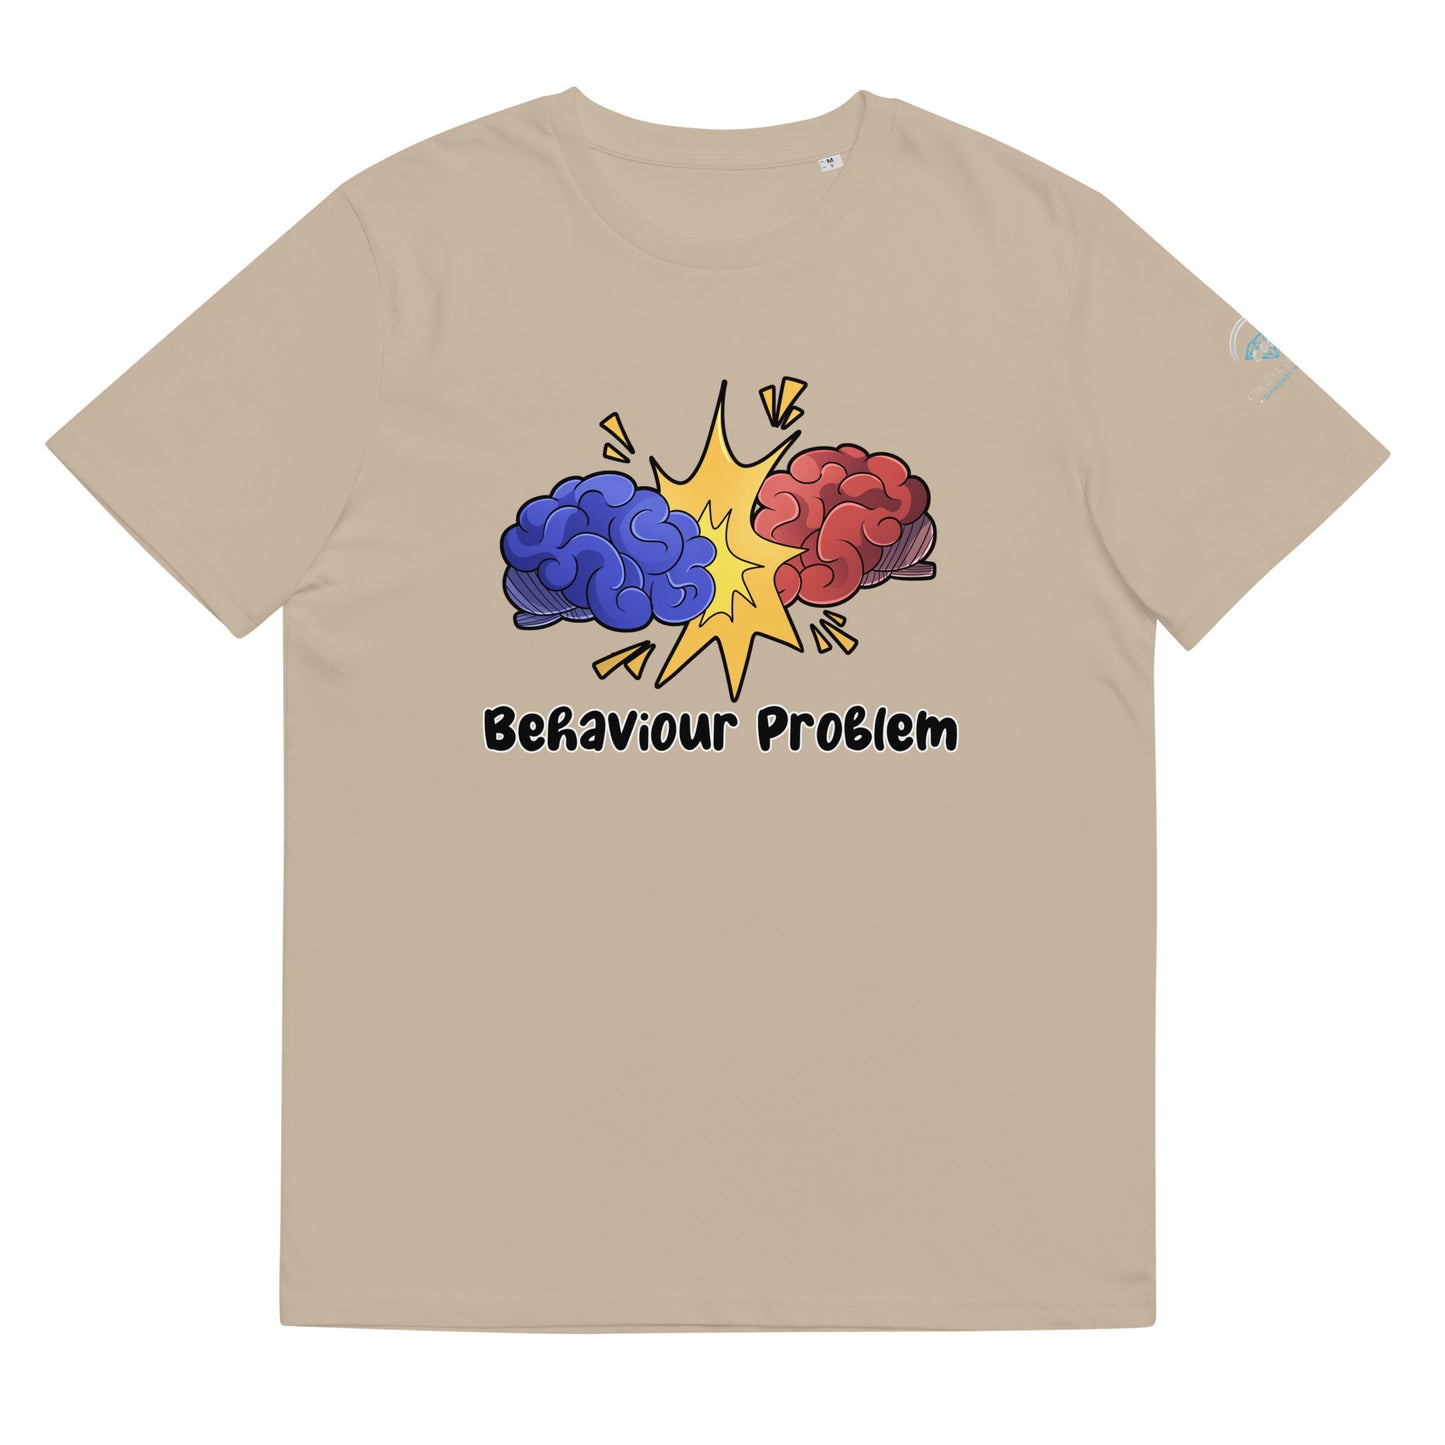 Behaviour Problems T-Shirt